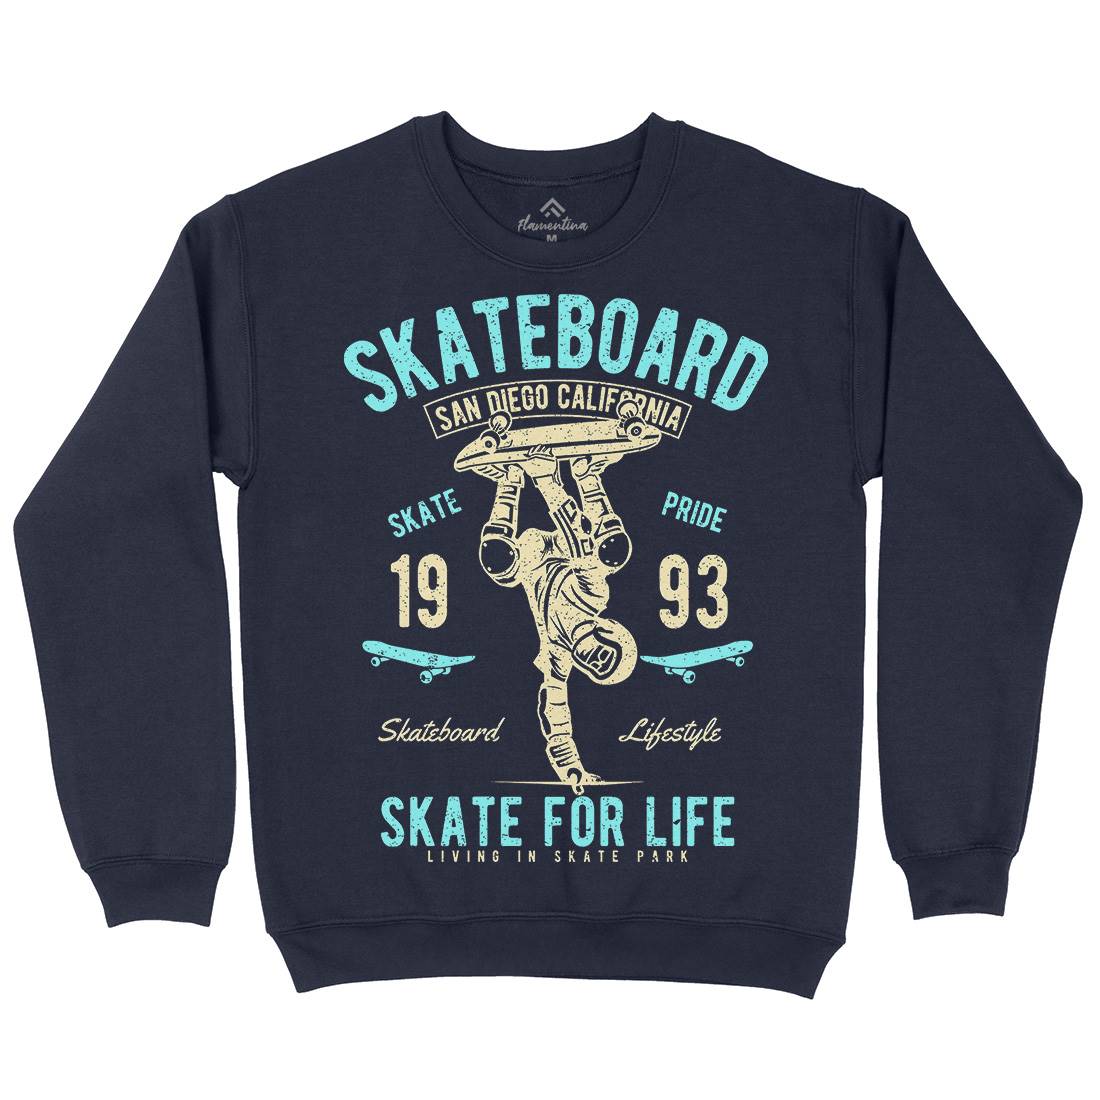 Skate For Life Kids Crew Neck Sweatshirt Skate A143